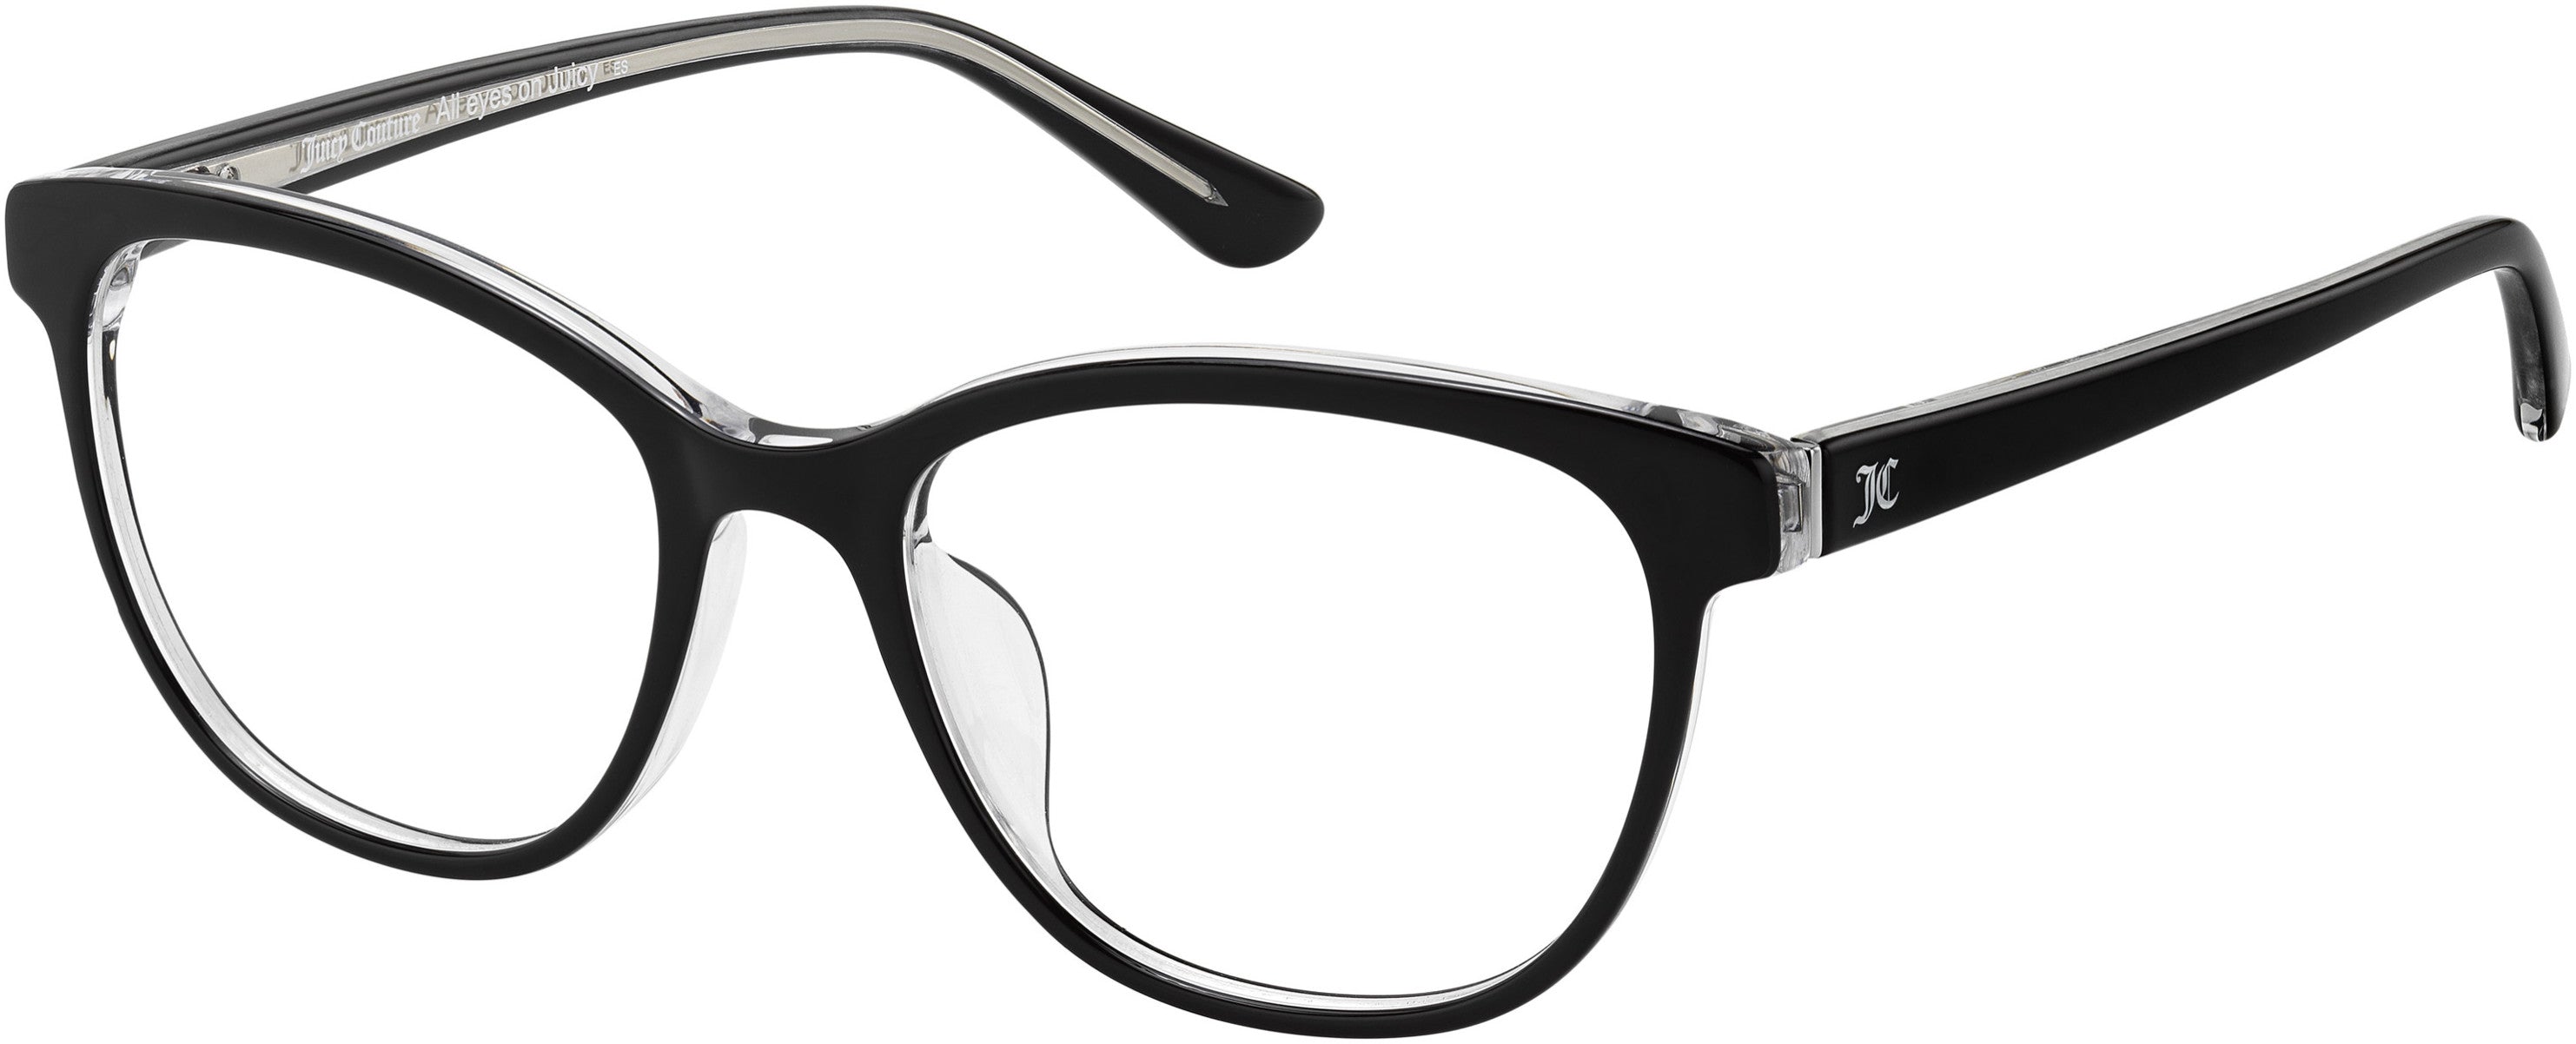 Juicy Couture Juicy 197 Rectangular Eyeglasses 0807-0807  Black (00 Demo Lens)